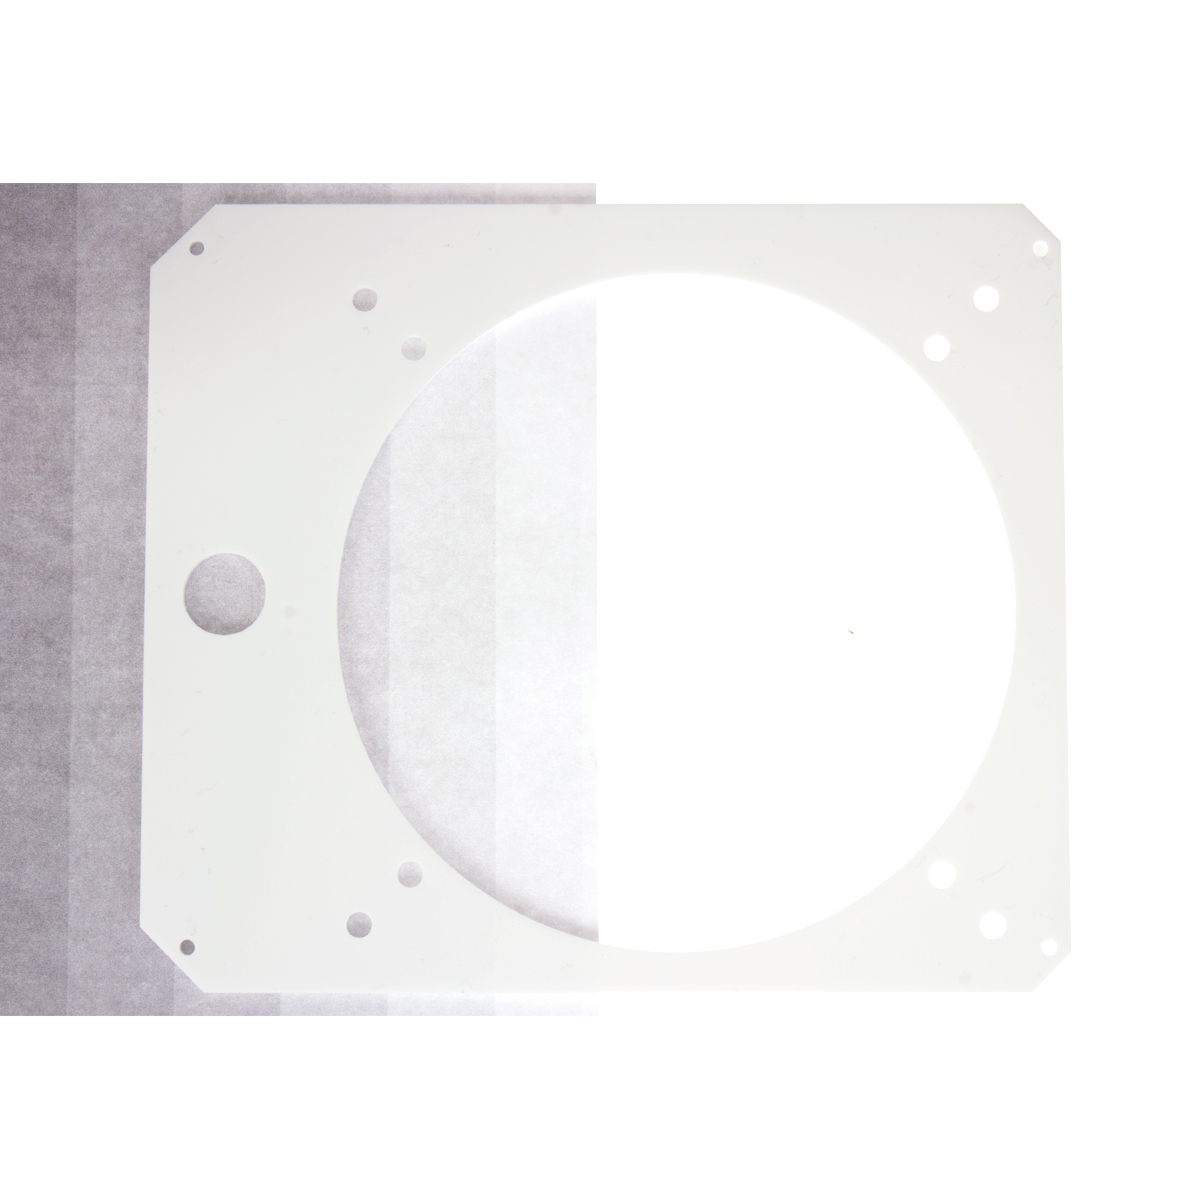 Lazer3D LZ7 Right Panel (16mm Vandal) - Moonlight White Open